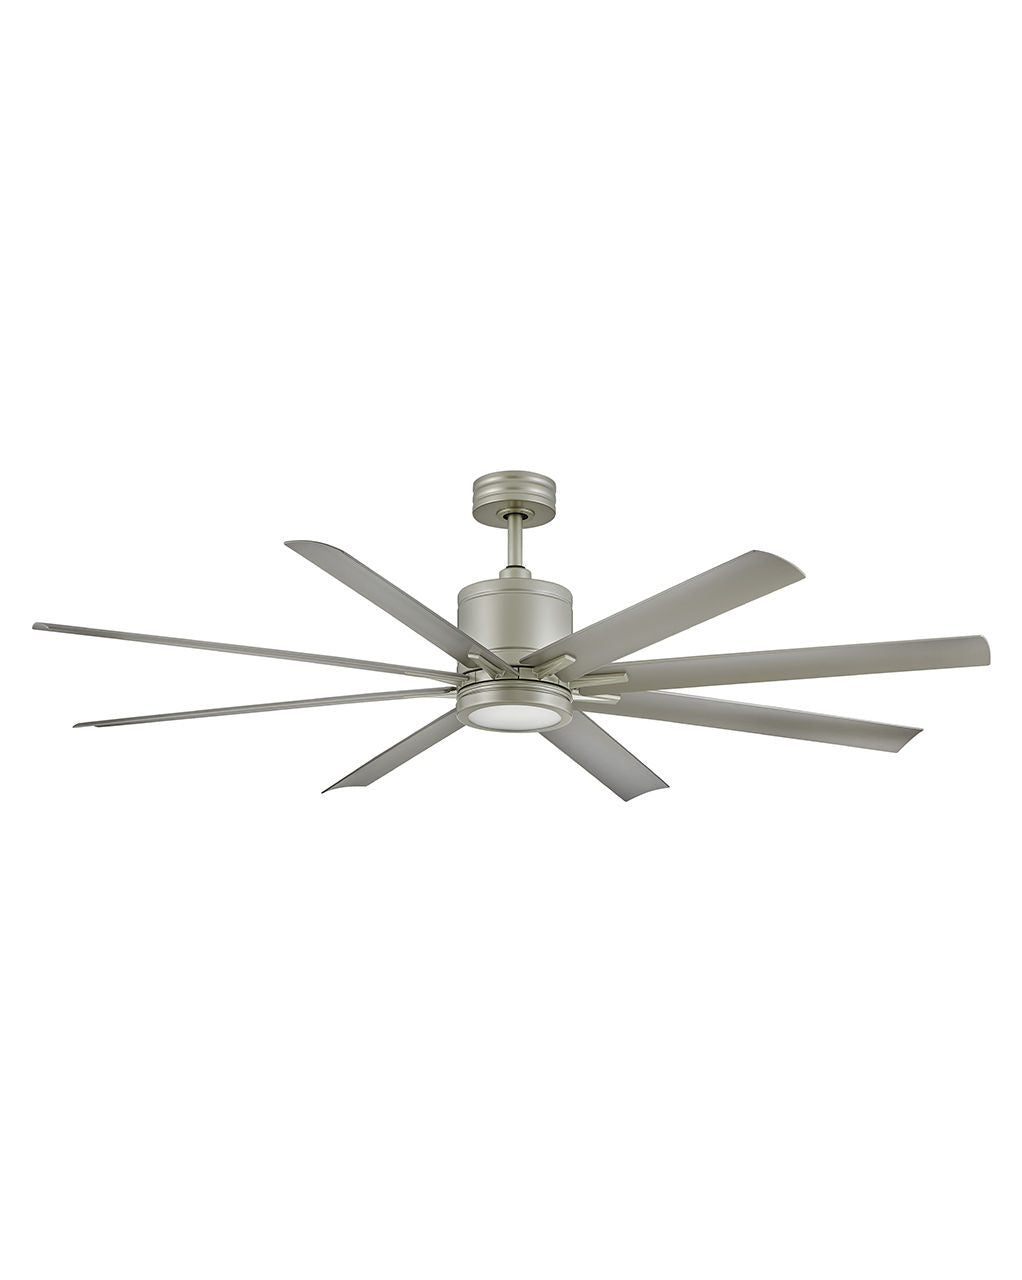 Vantage 66" LED Ceiling Fan in Brushed Nickel from Hinkley Lighting, item number 902466FBN-LWD